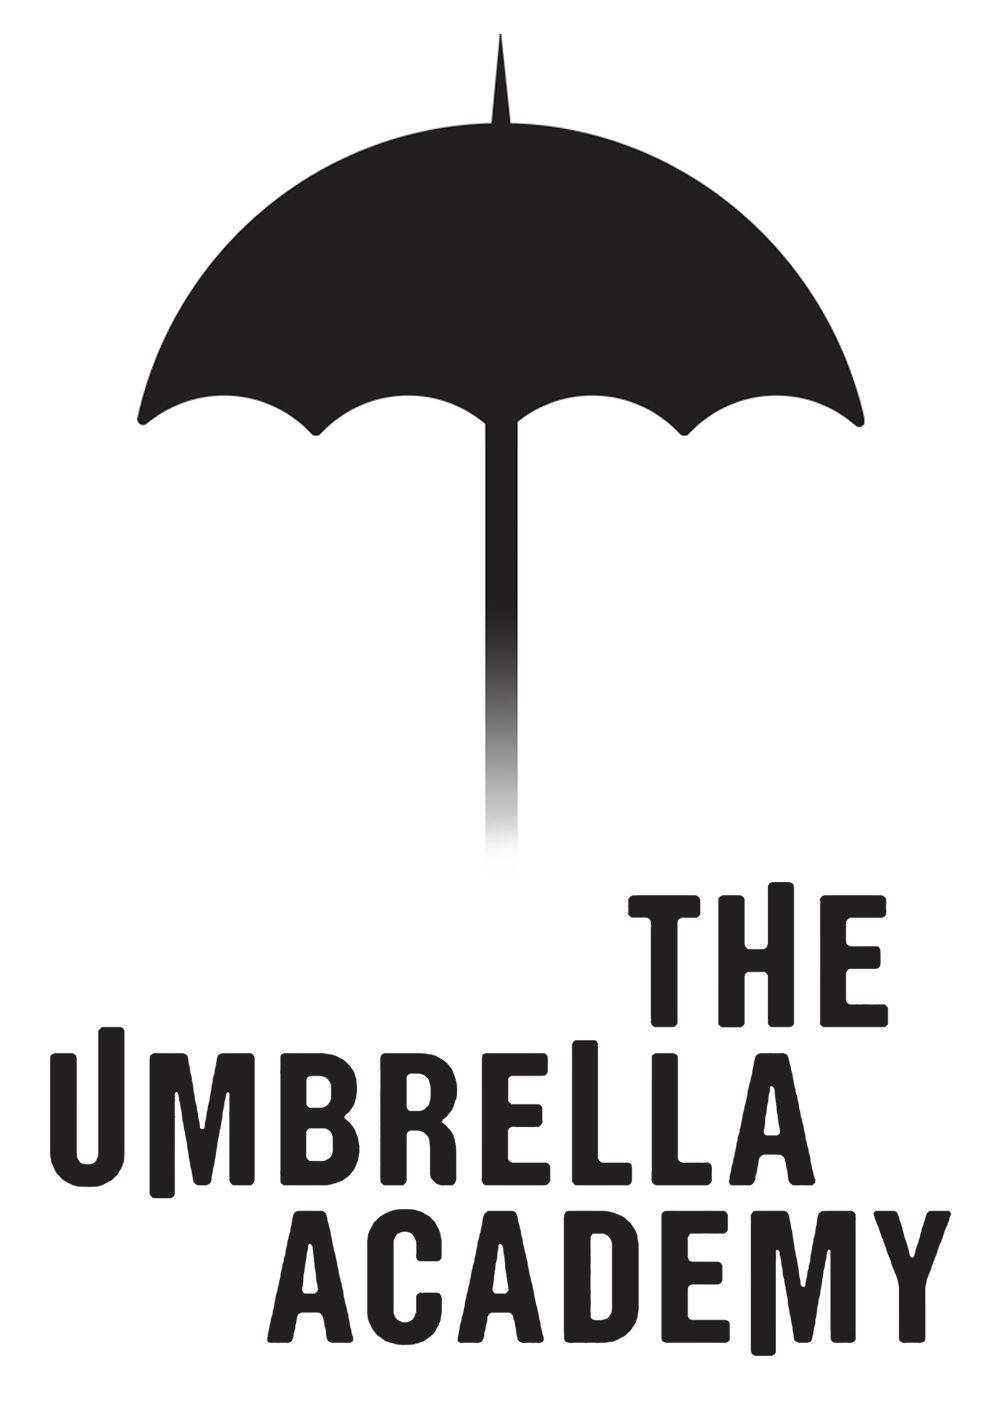 Unite! The Umbrella Academy Background